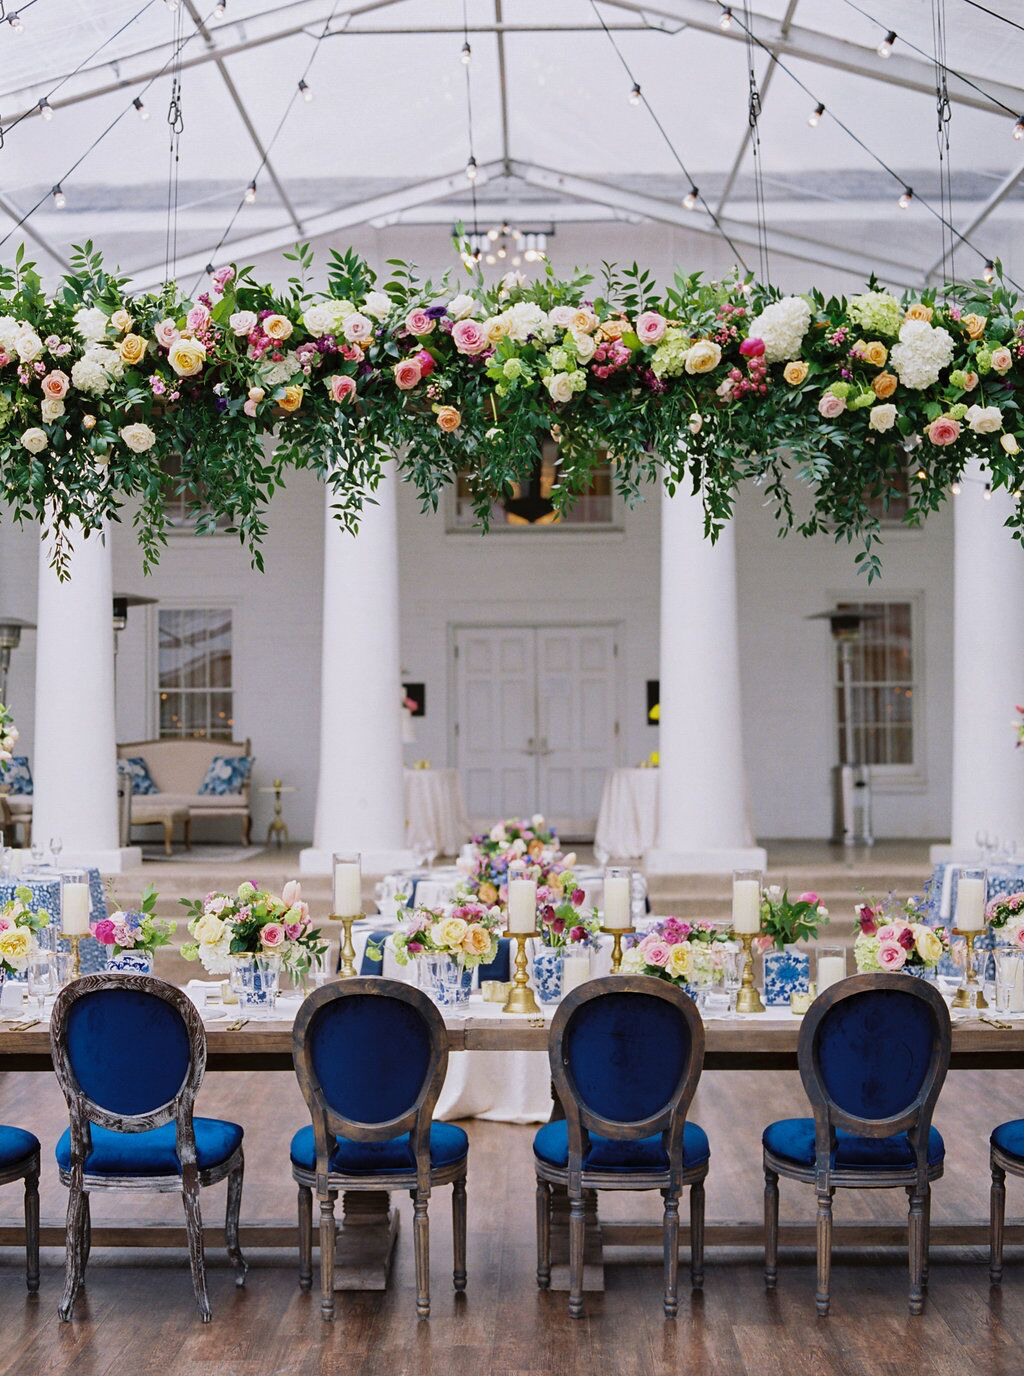 Arlington Hall Tent Wedding Reception with Hanging Floral Installation